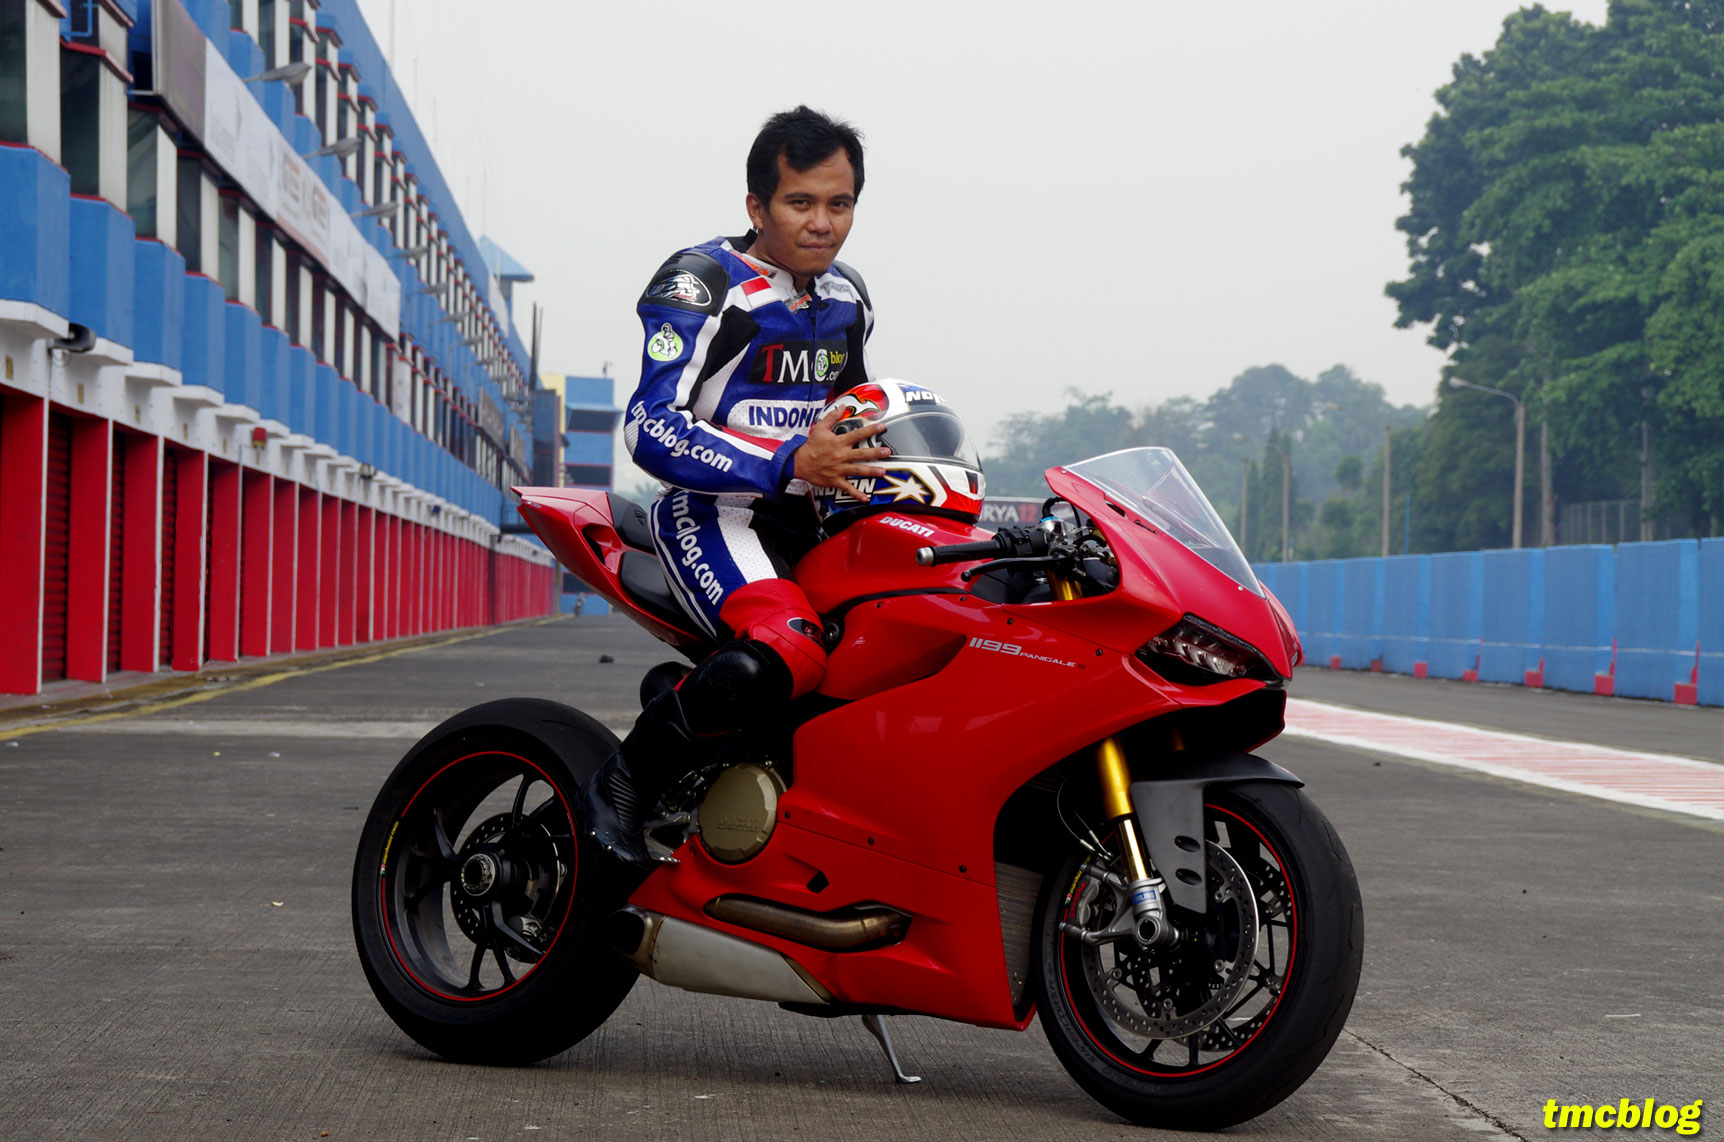 Jumpa Ducati 1199 Panigale TMC MotoNews